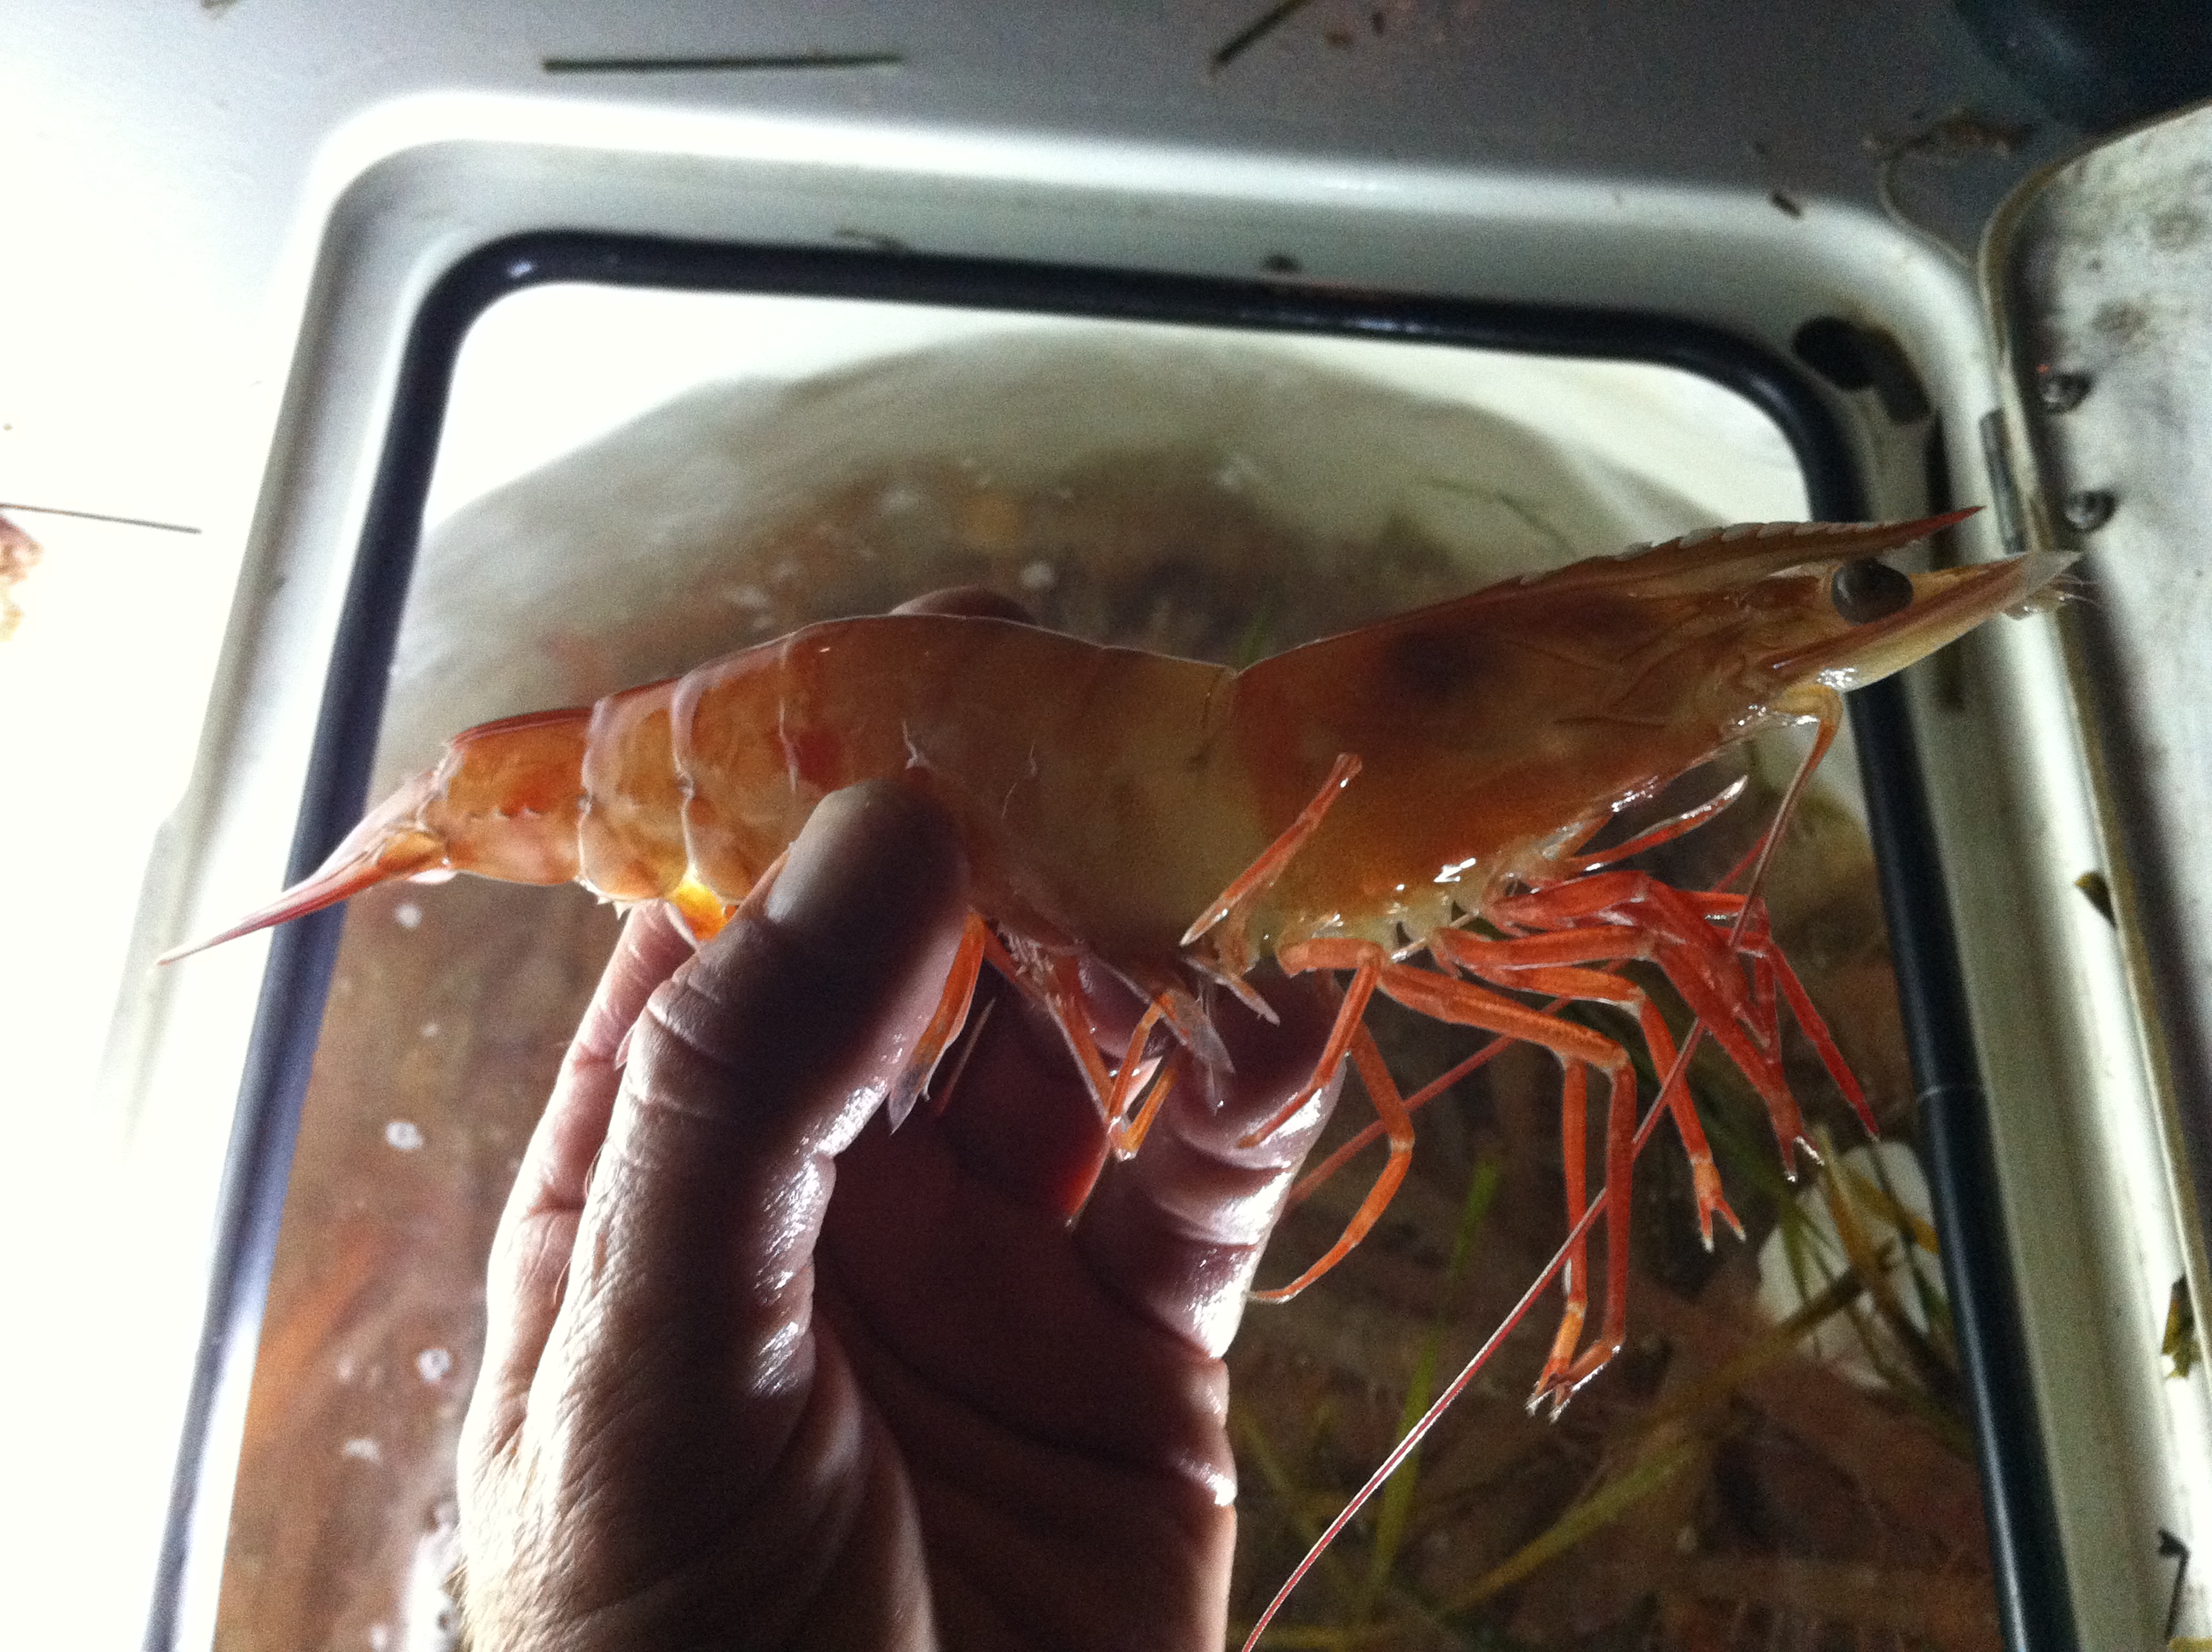 https://captaindaveperkins.com/wp-content/uploads/2013/01/Shrimp-in-hand.jpg